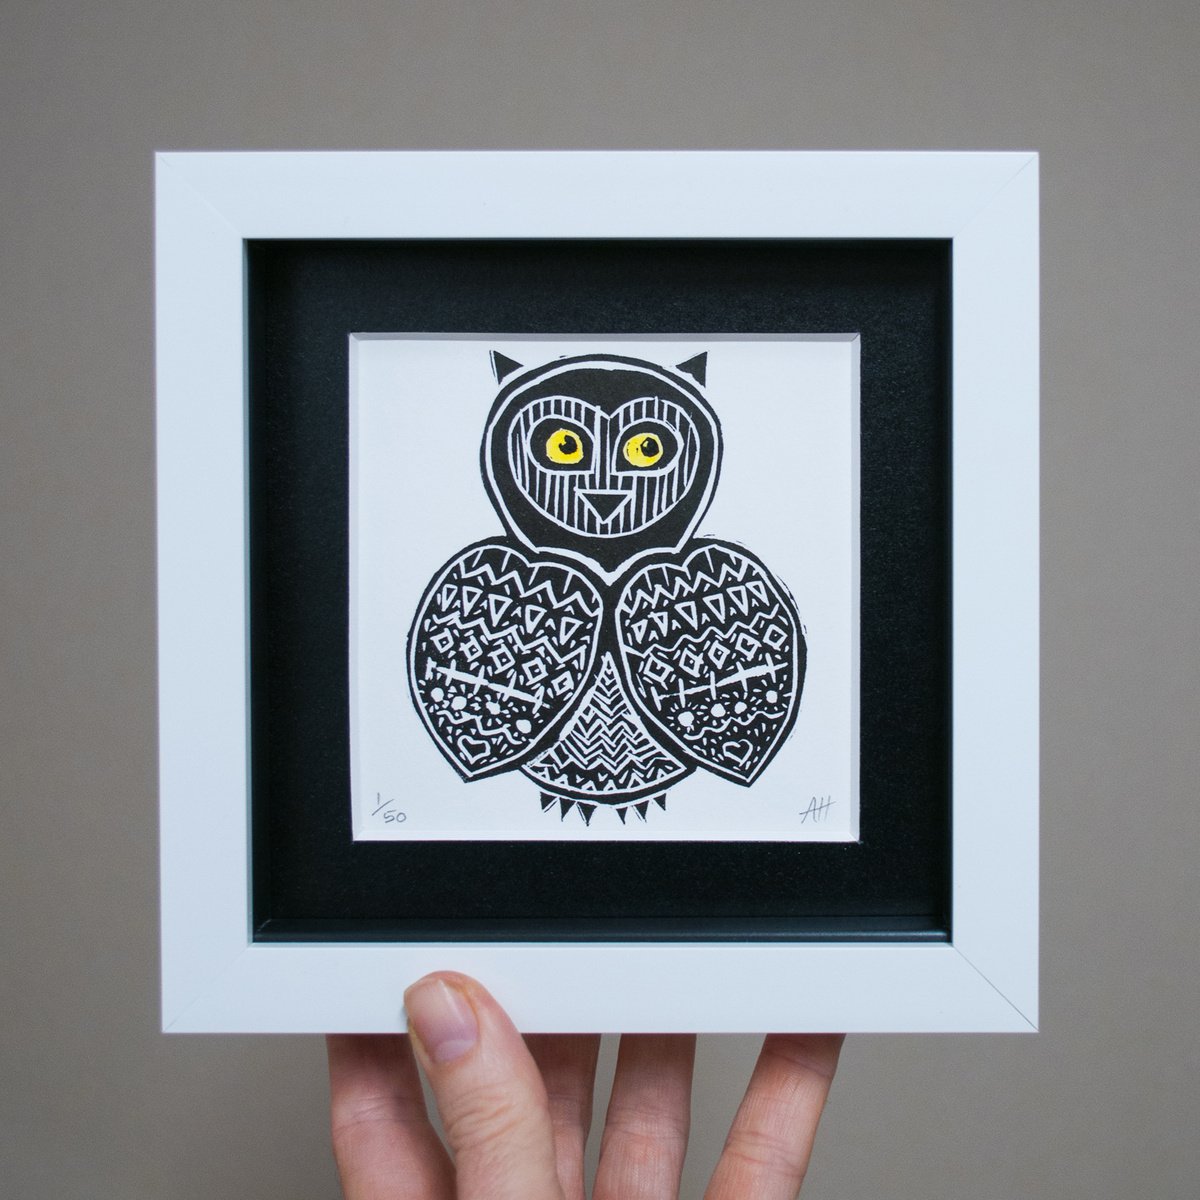 Owl by AH Image Maker